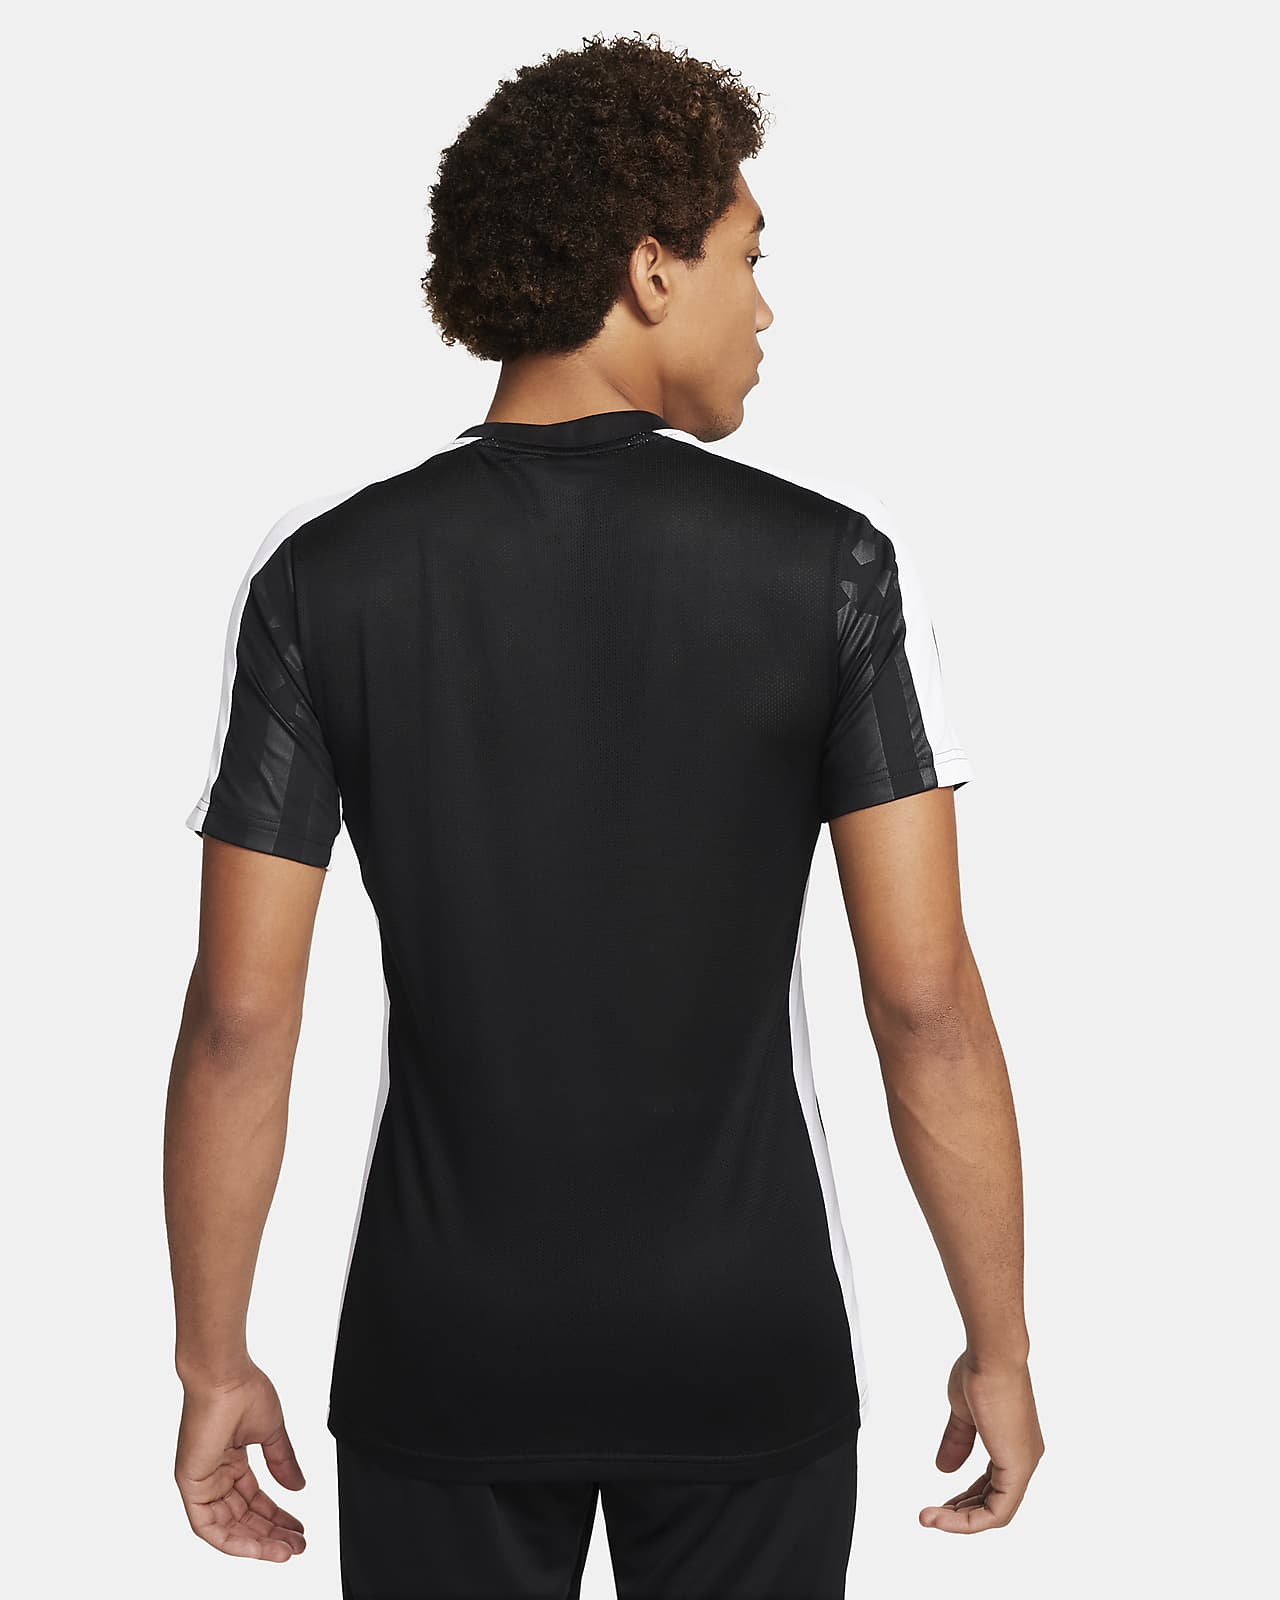 Academy Men\'s Short-Sleeve Top. Soccer Nike Dri-FIT